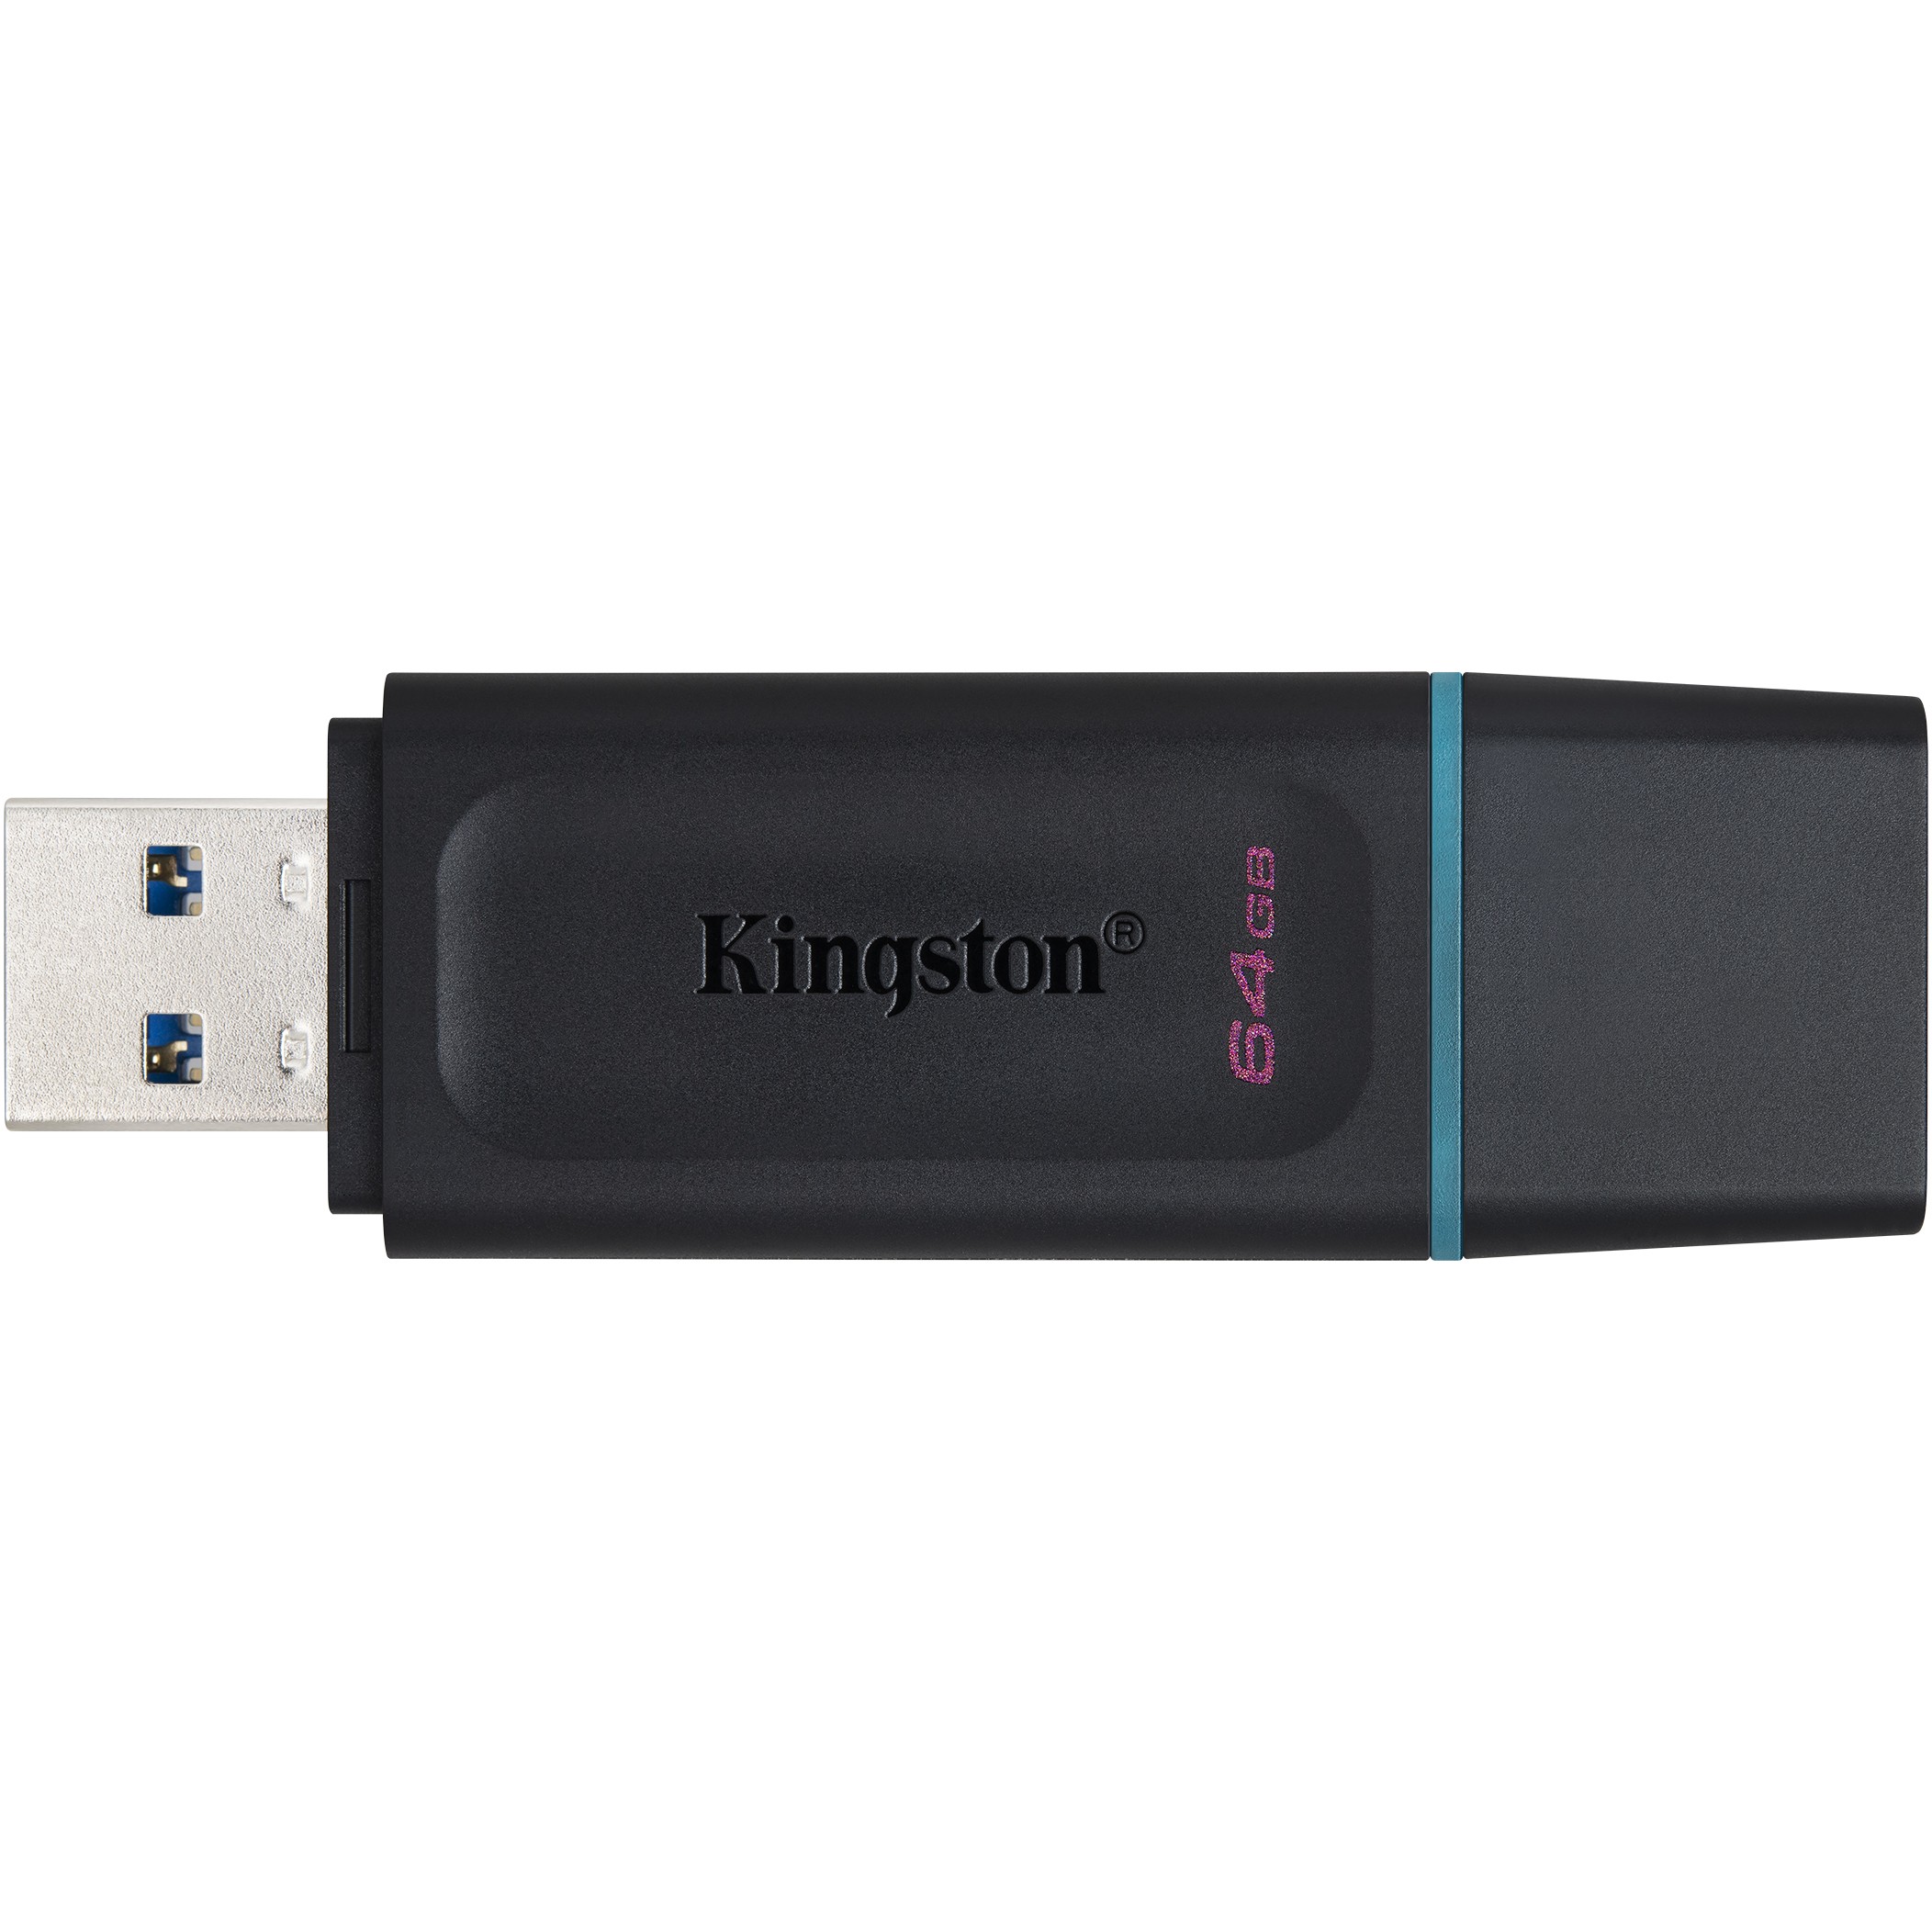 Kingston DTX/64GB-2P, USB Sticks, Kingston Technology  (BILD3)